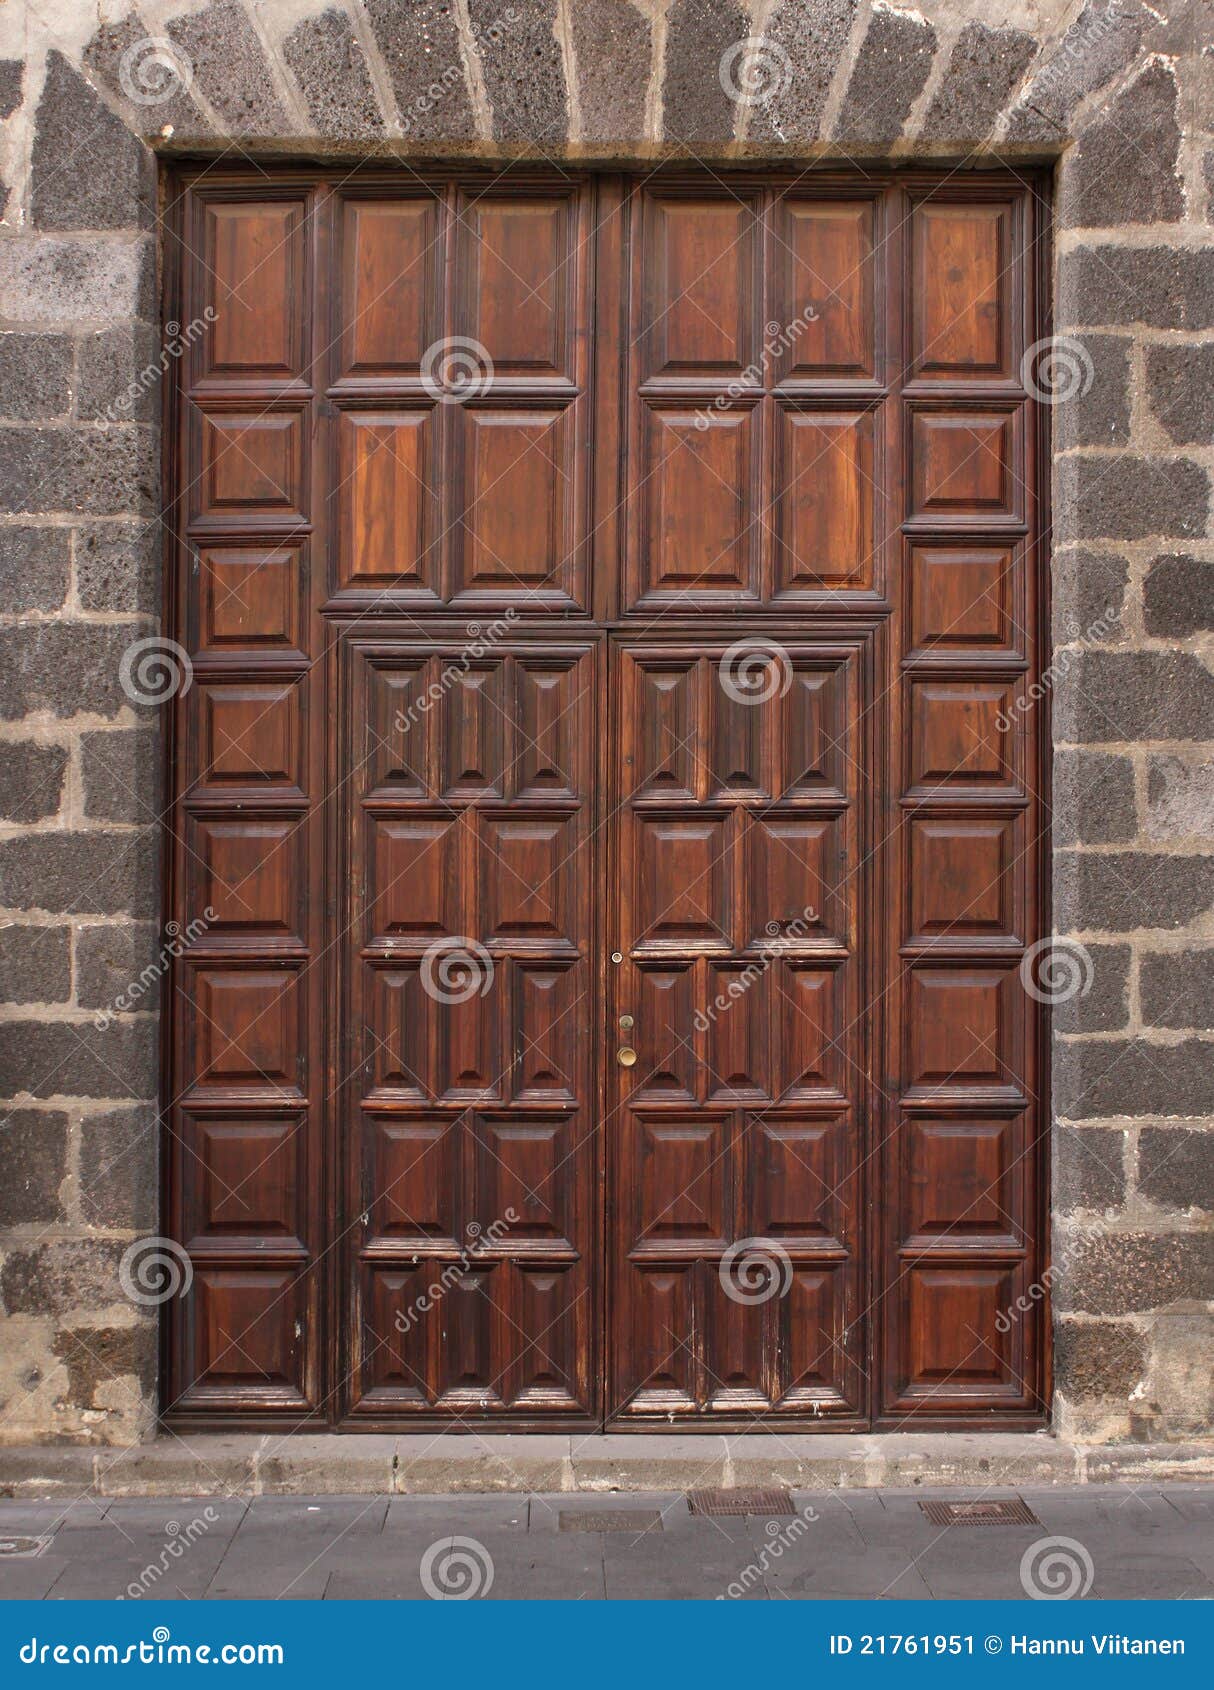 imposing wooden doors entry